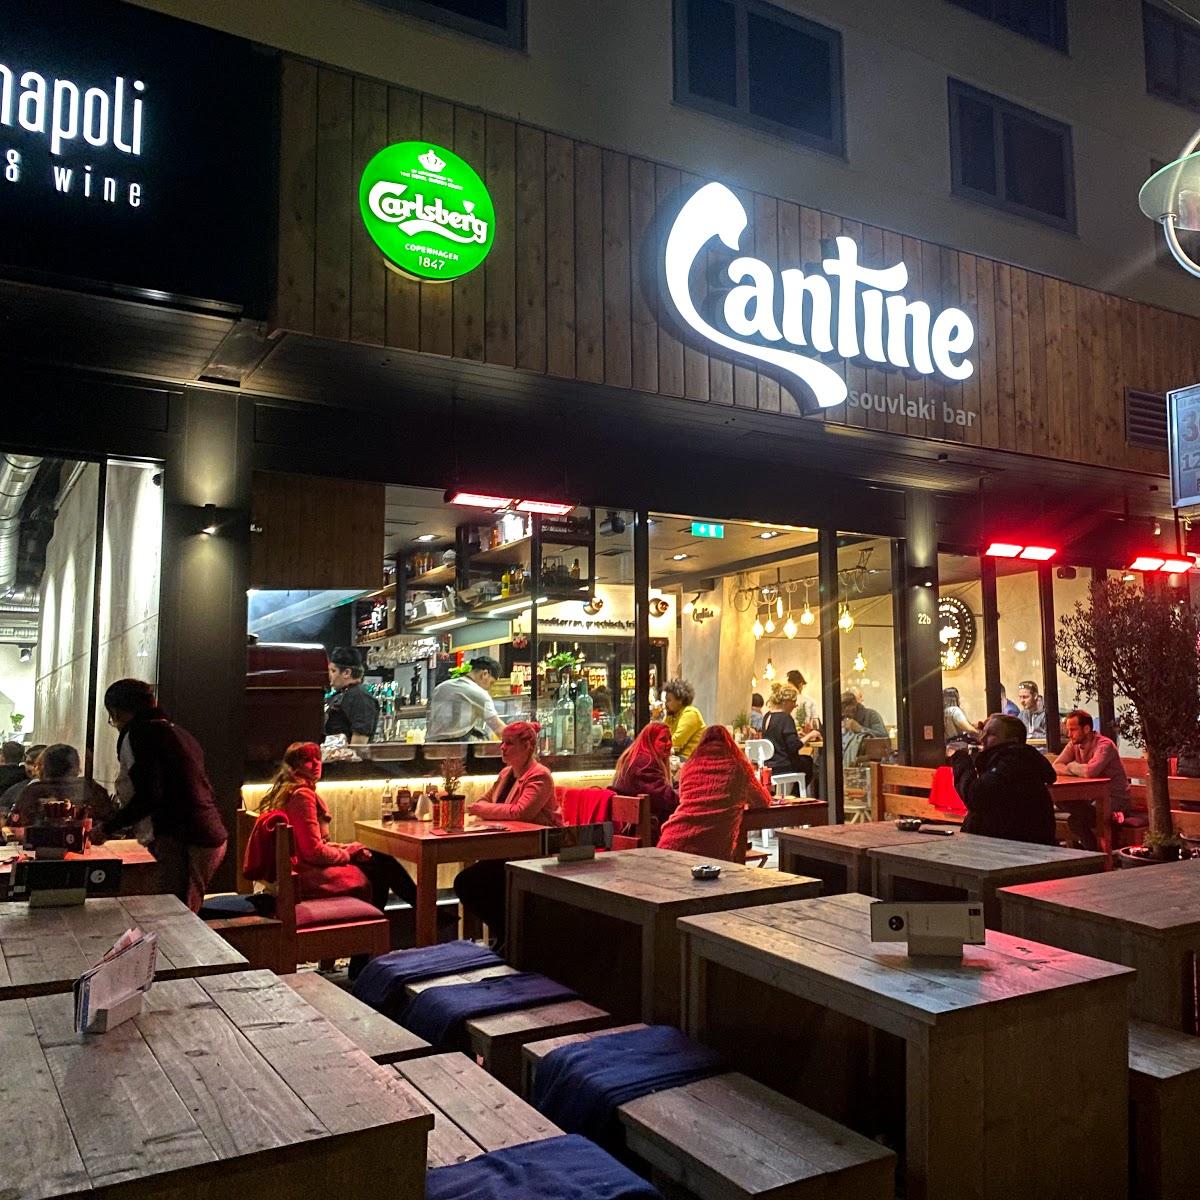 Restaurant "Cantine Souvlaki Bar" in Dortmund